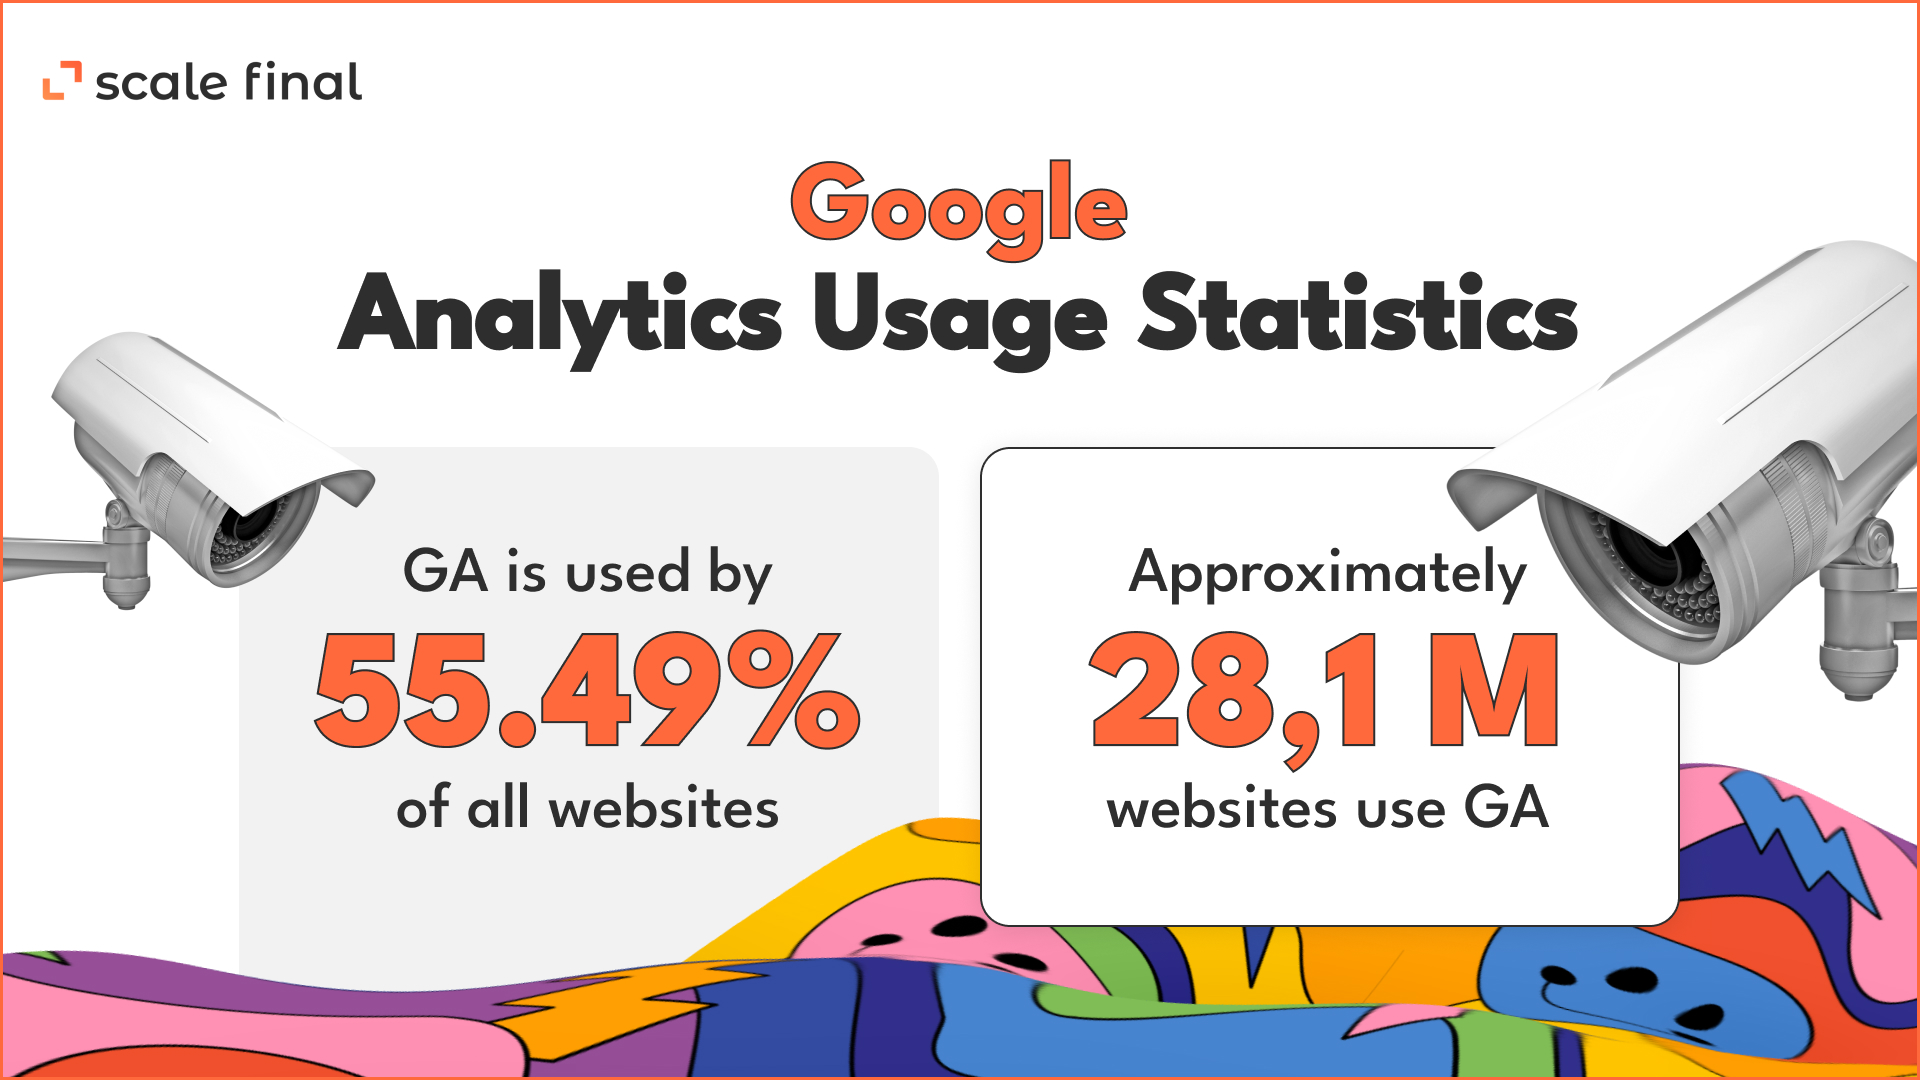 Goolge Analytics usage statistics GA is used by 55.49 % of all websites.Approximately 28.1 million websites use GA. 